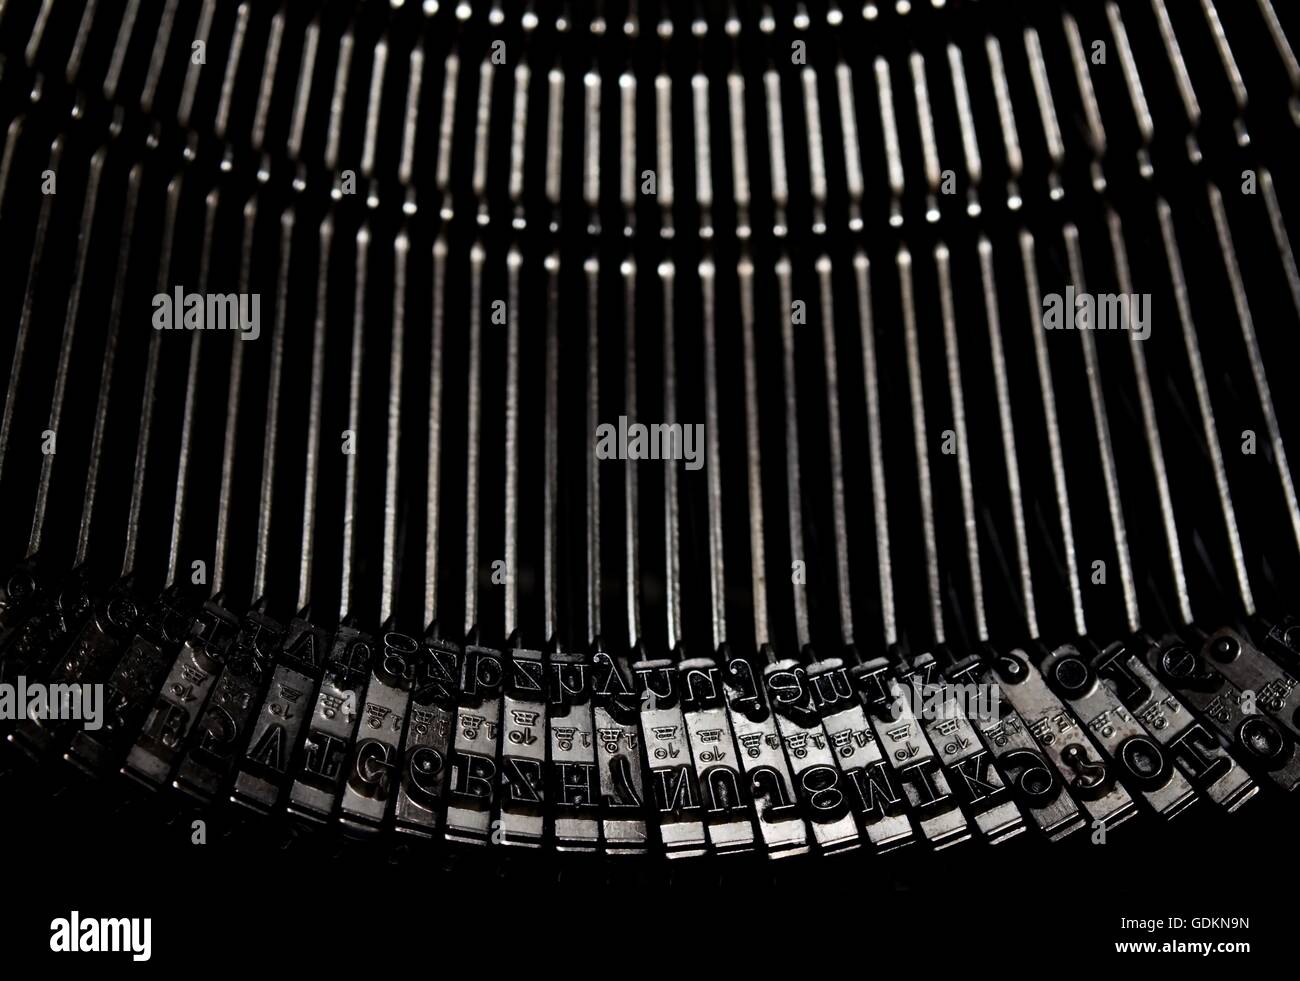 Mechanism inside a vintage typewriter Stock Photo